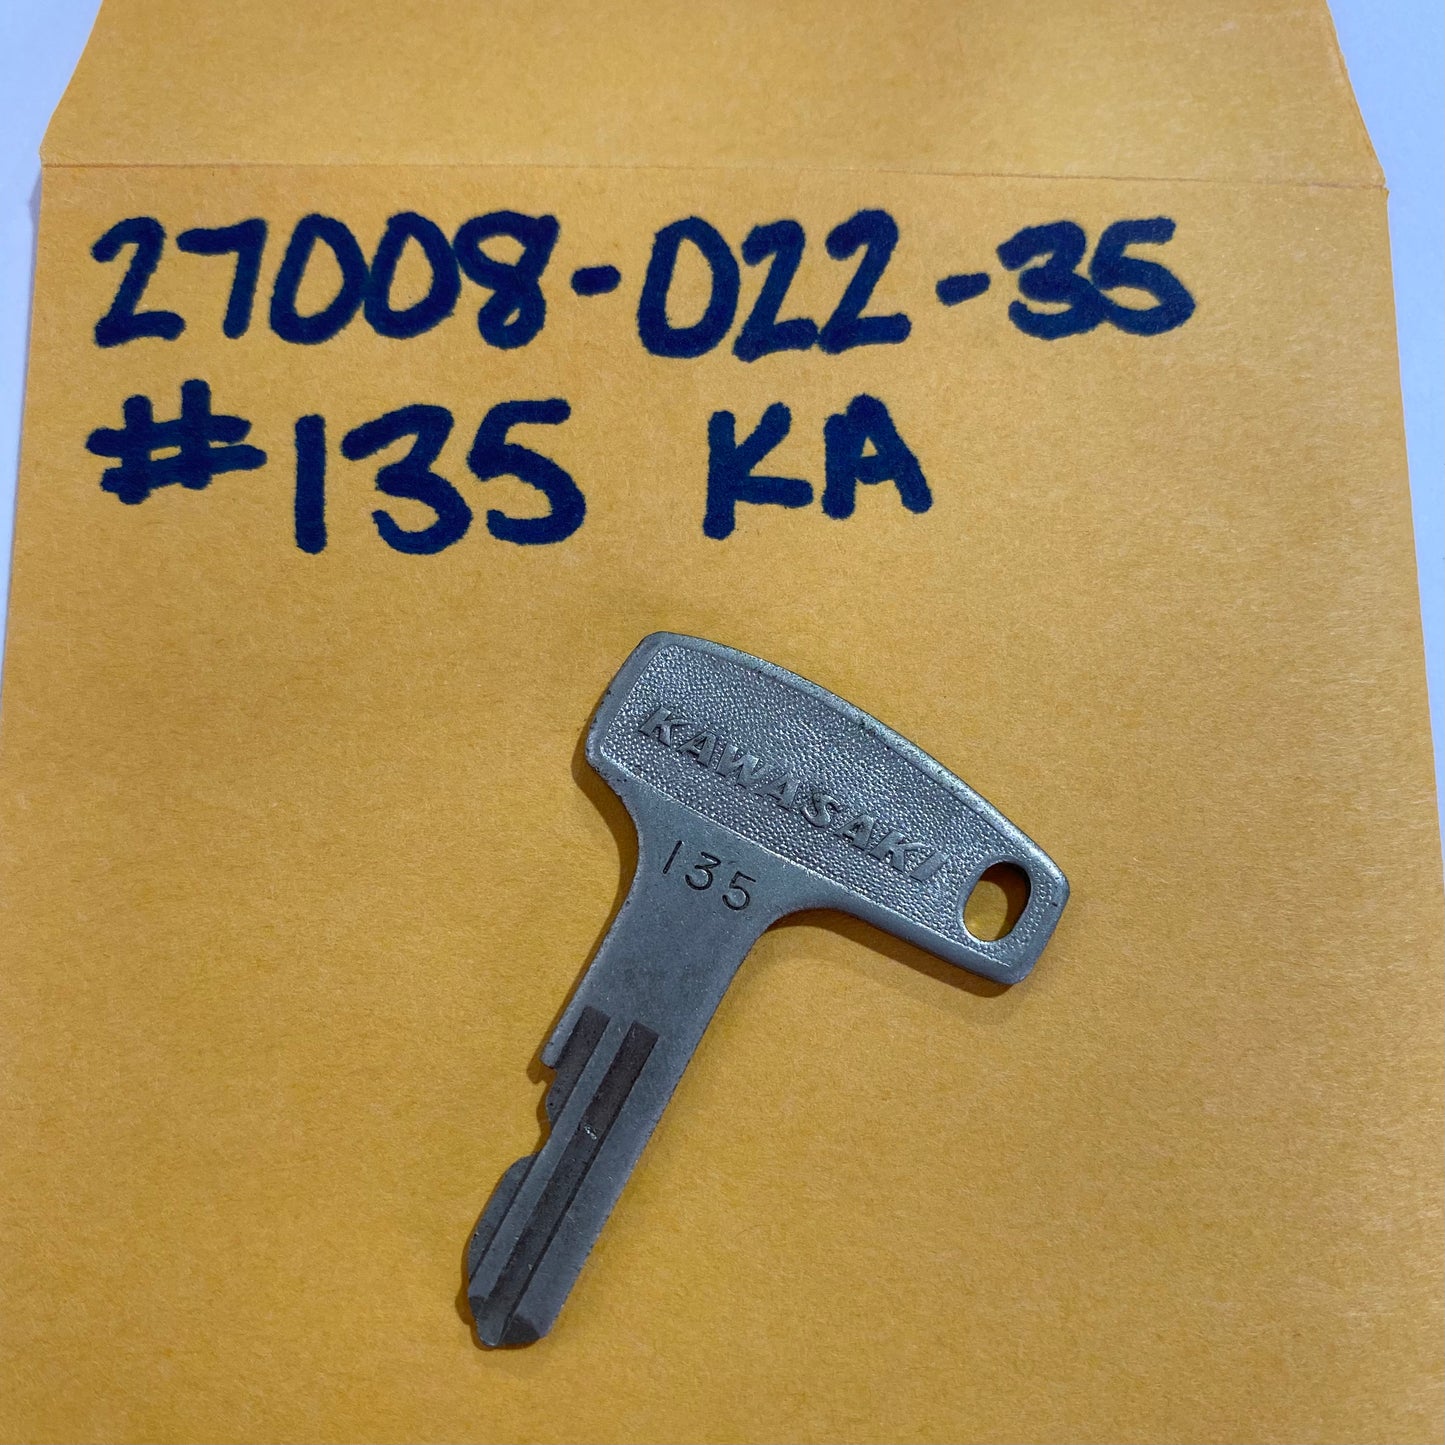 Kawasaki Key Set #135 27008-022-35